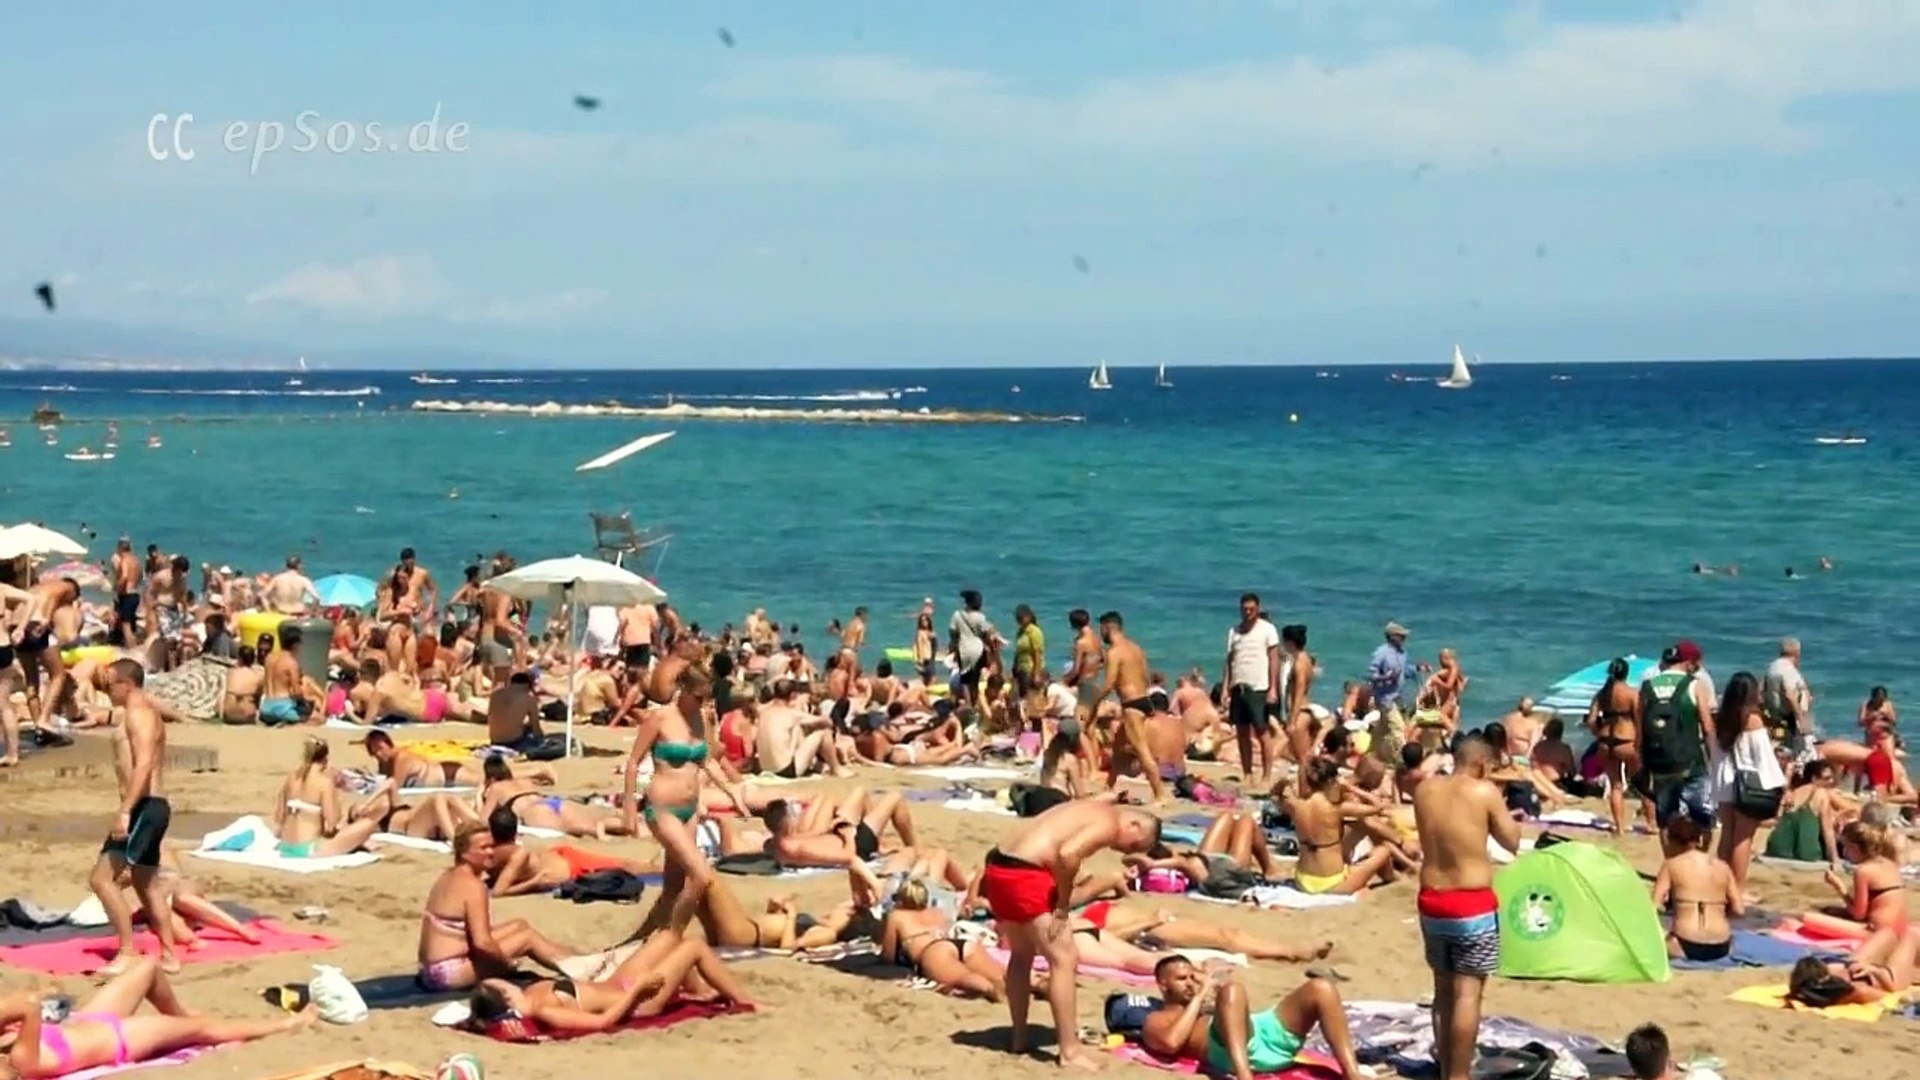 Male Beach Sex - Sex party at Barcelona Beach of Barceloneta